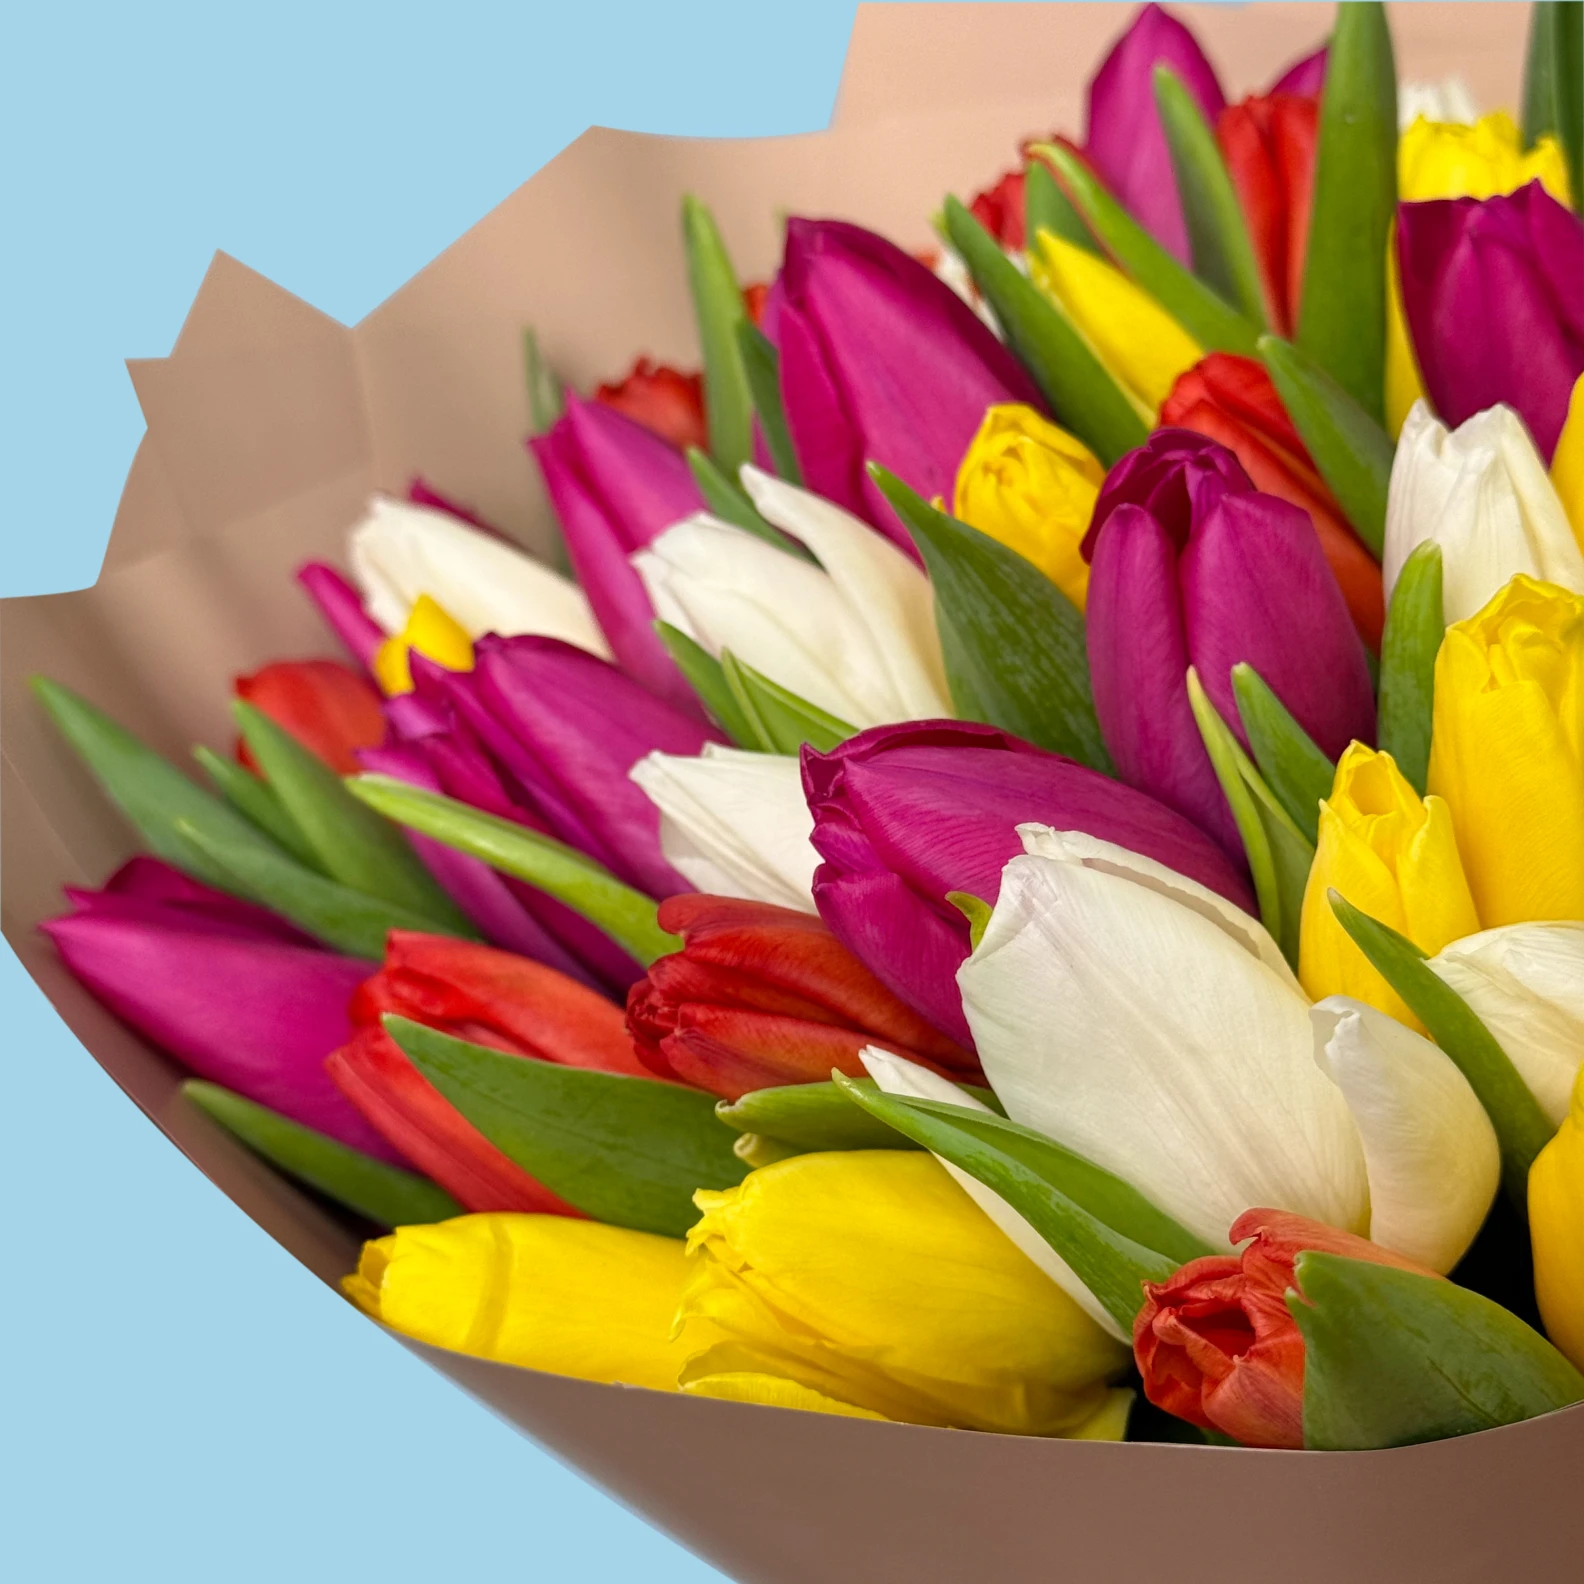 70 Mixed Tulips - image №3